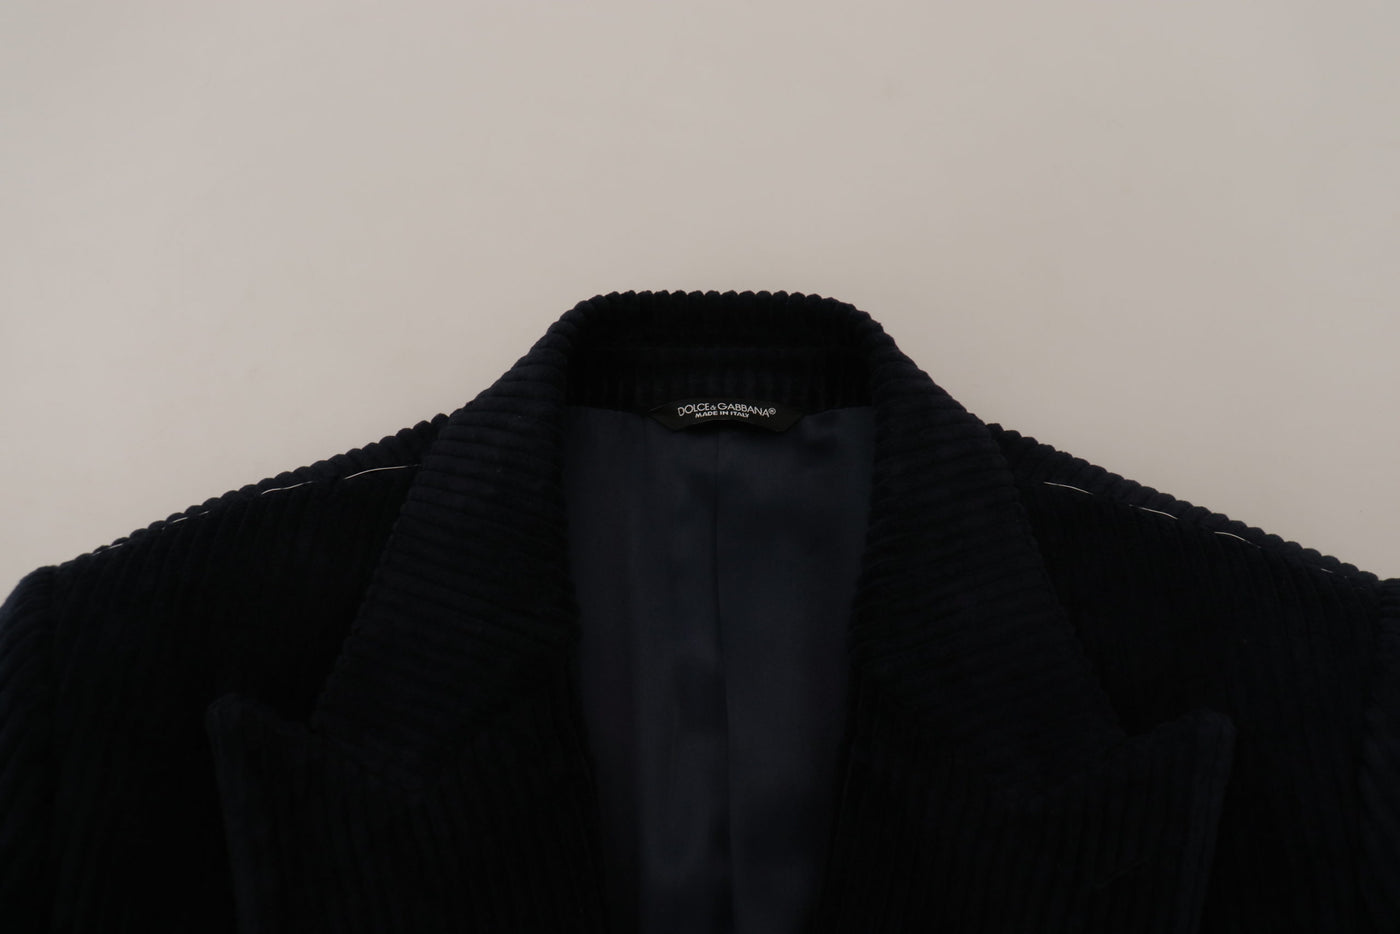 Dolce & Gabbana Black Cotton Cardigan Long Coat  Jacket